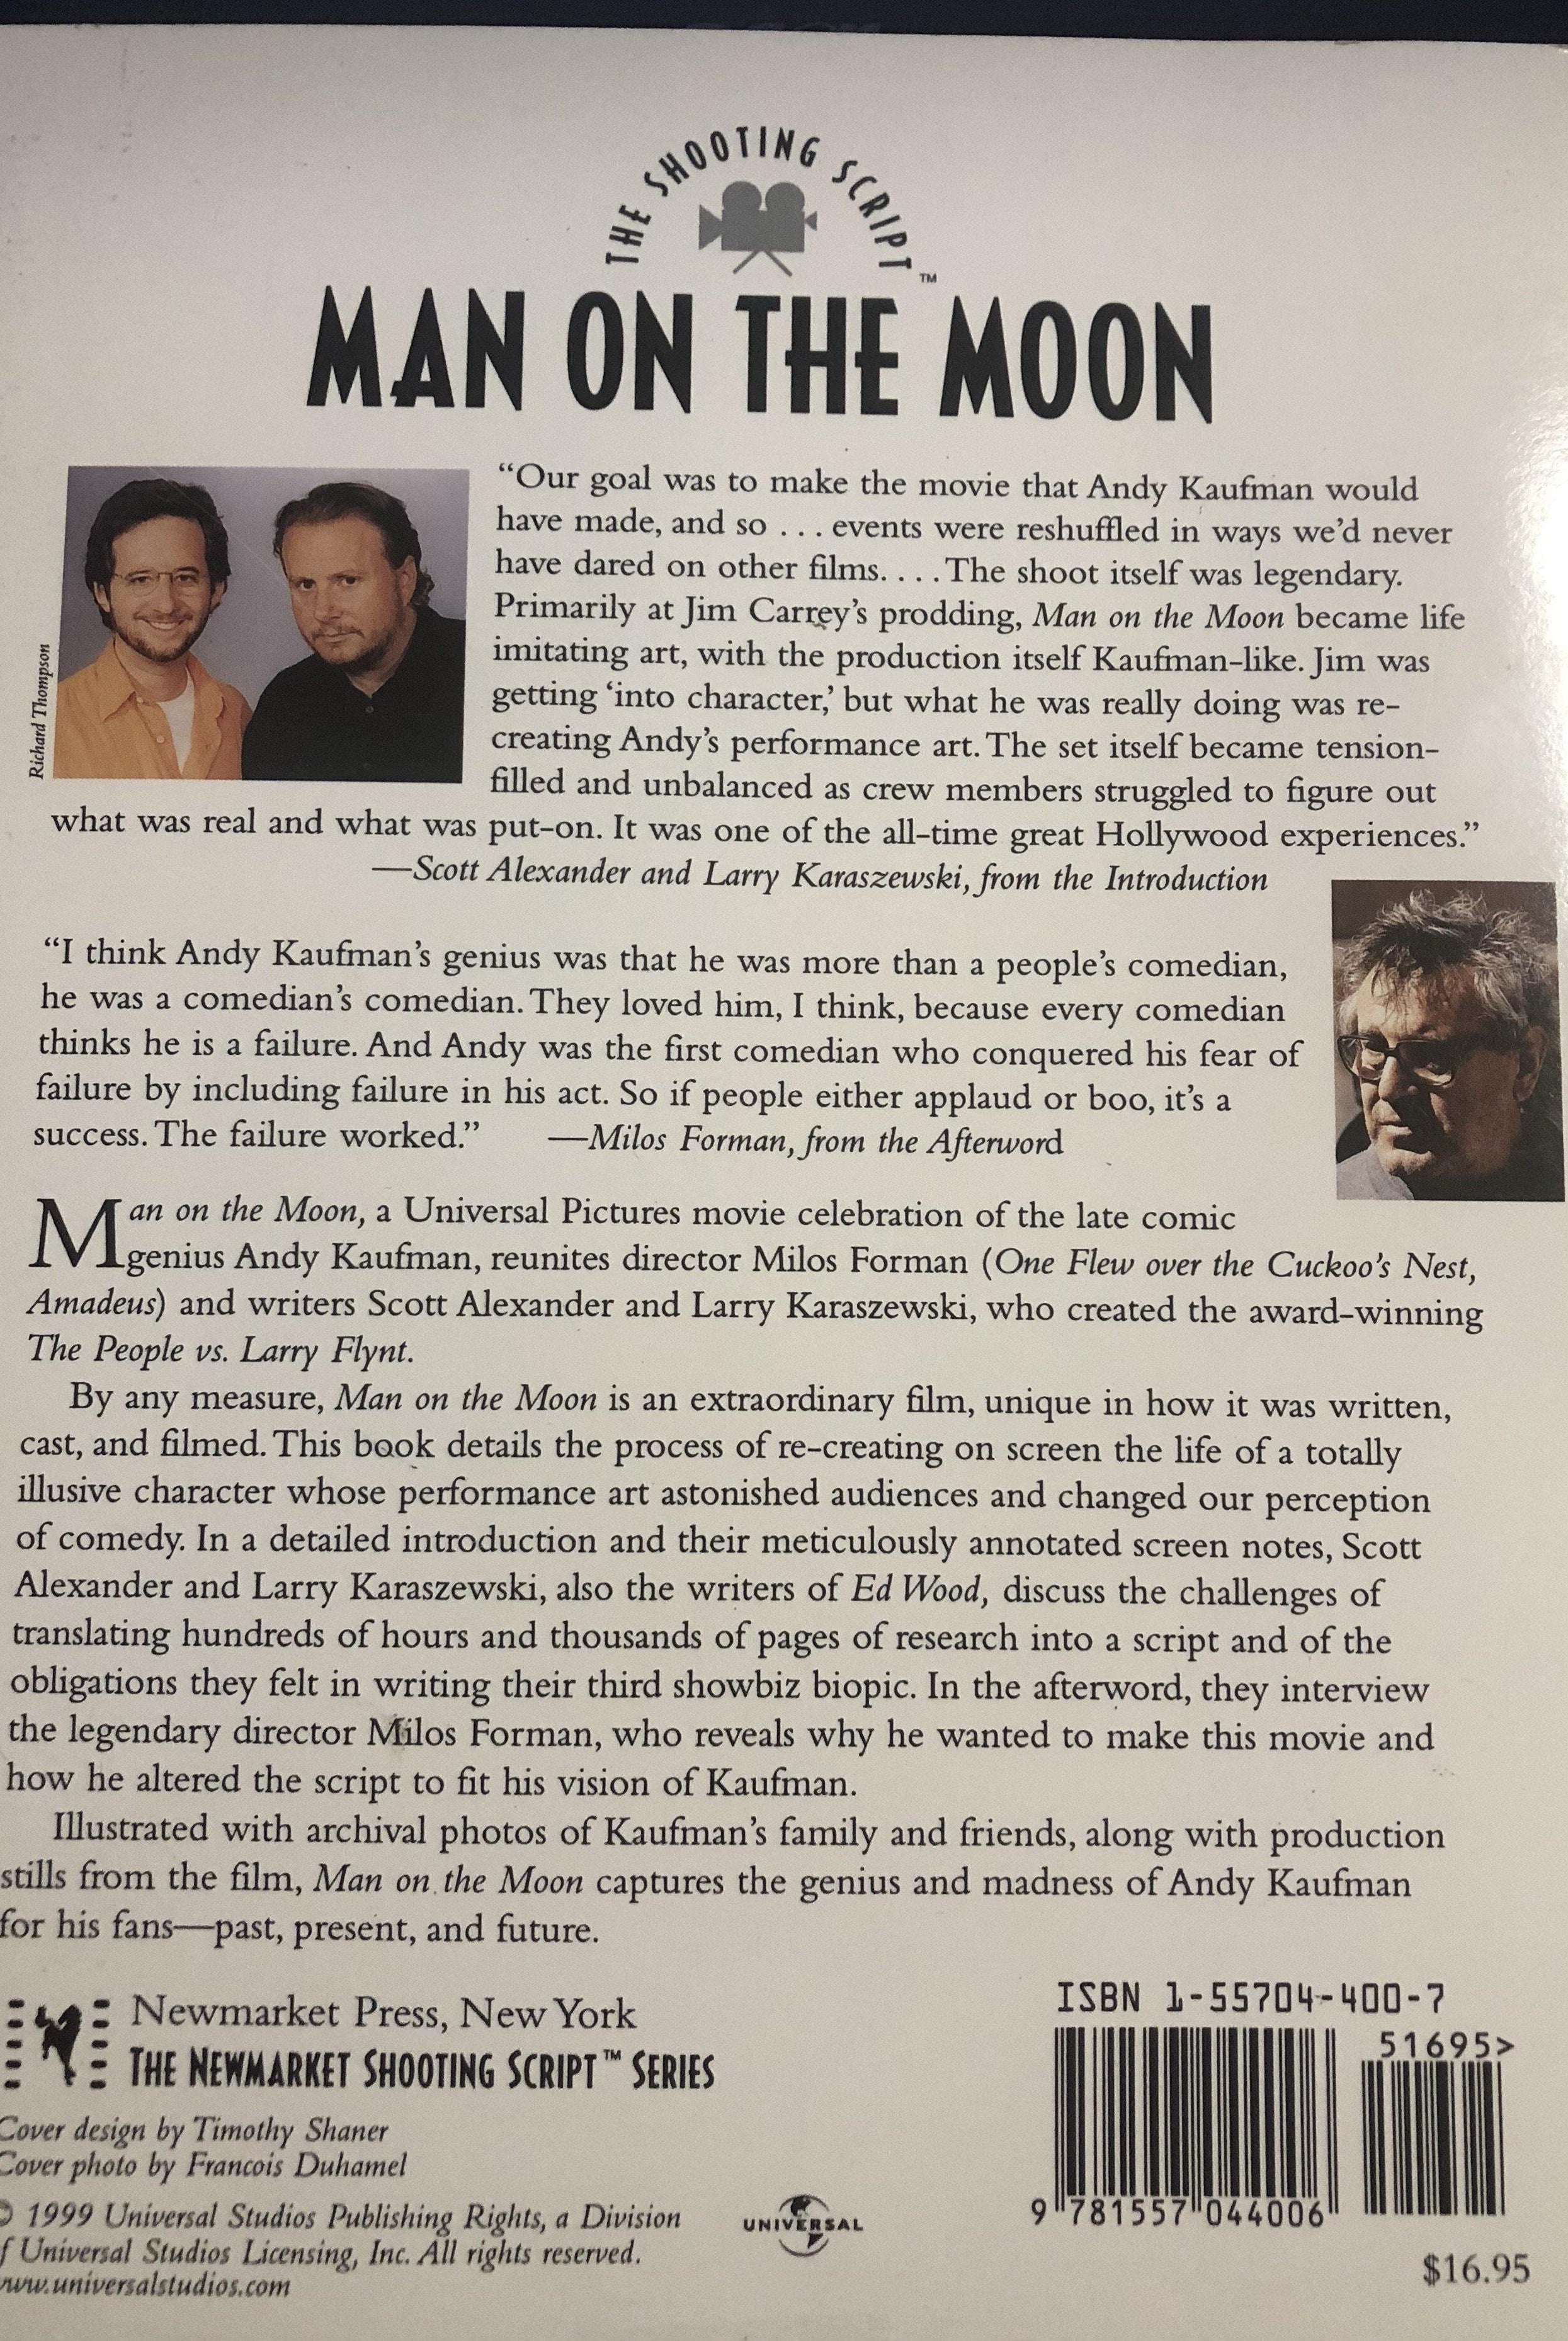 Man on the Moon: The Shooting Script (Newmarket Shooting Script) - Belfast Books